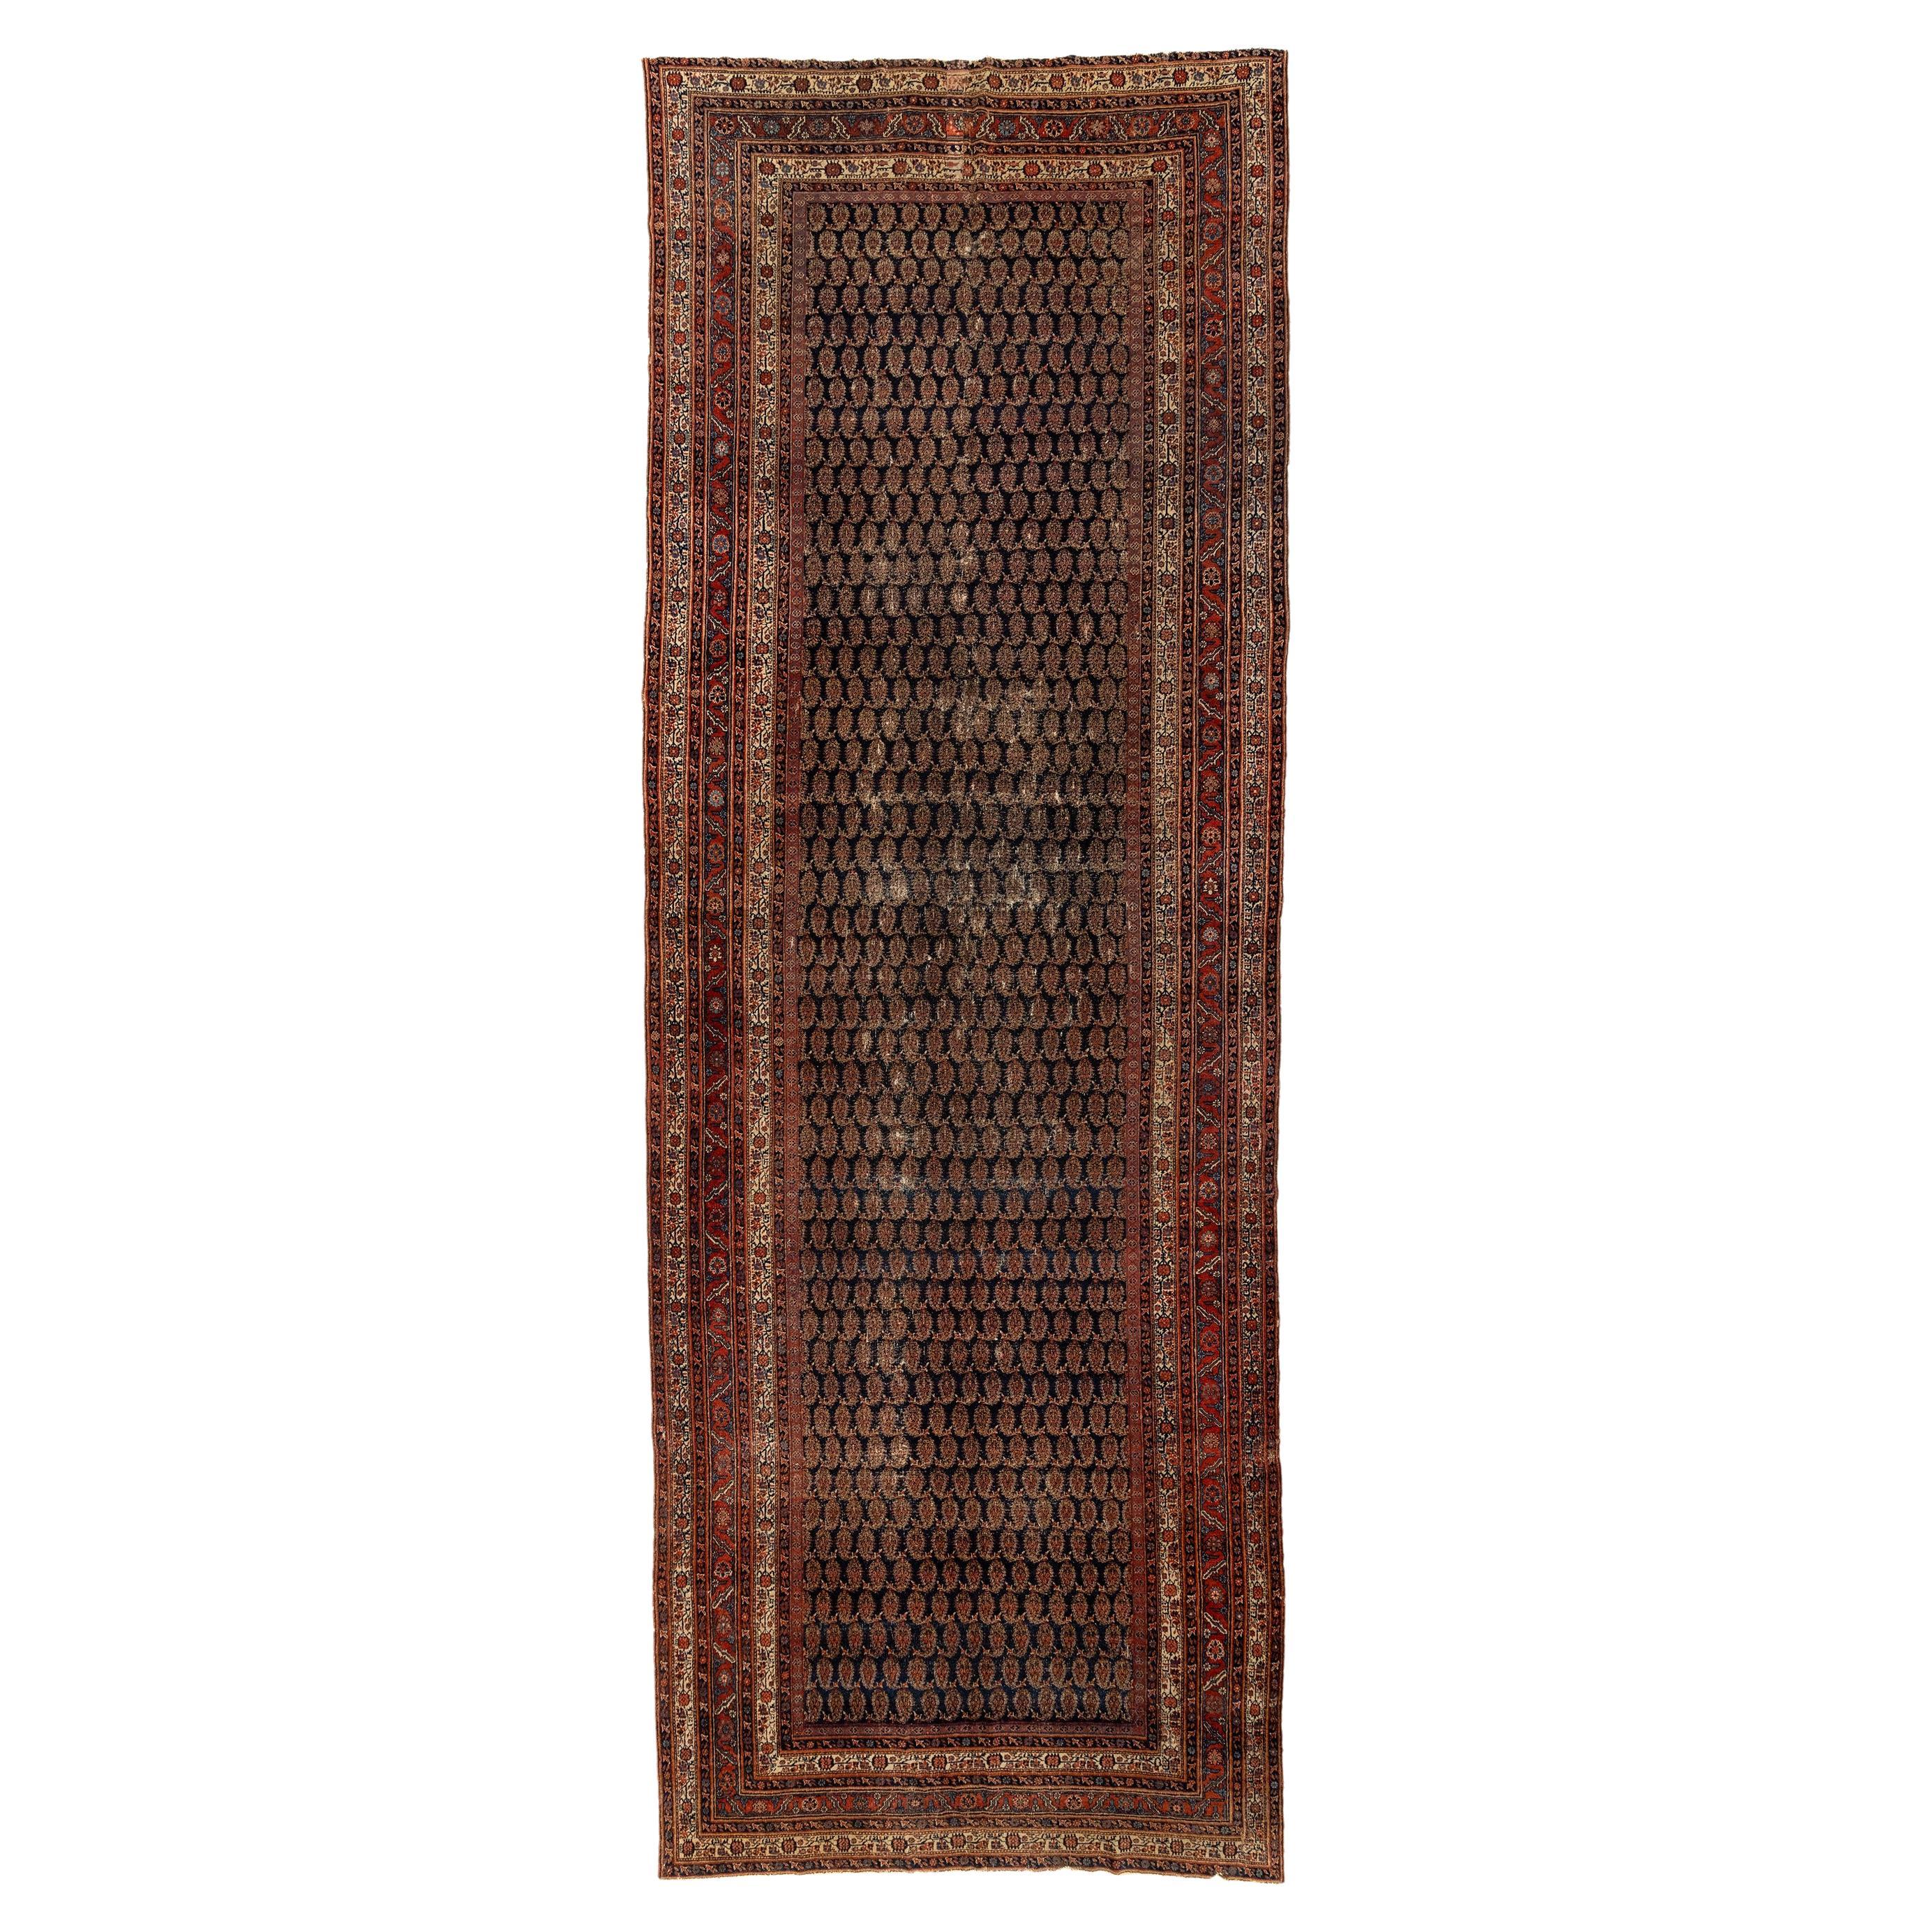 Antiker Farahan-Teppich, ca. 1880er Jahre